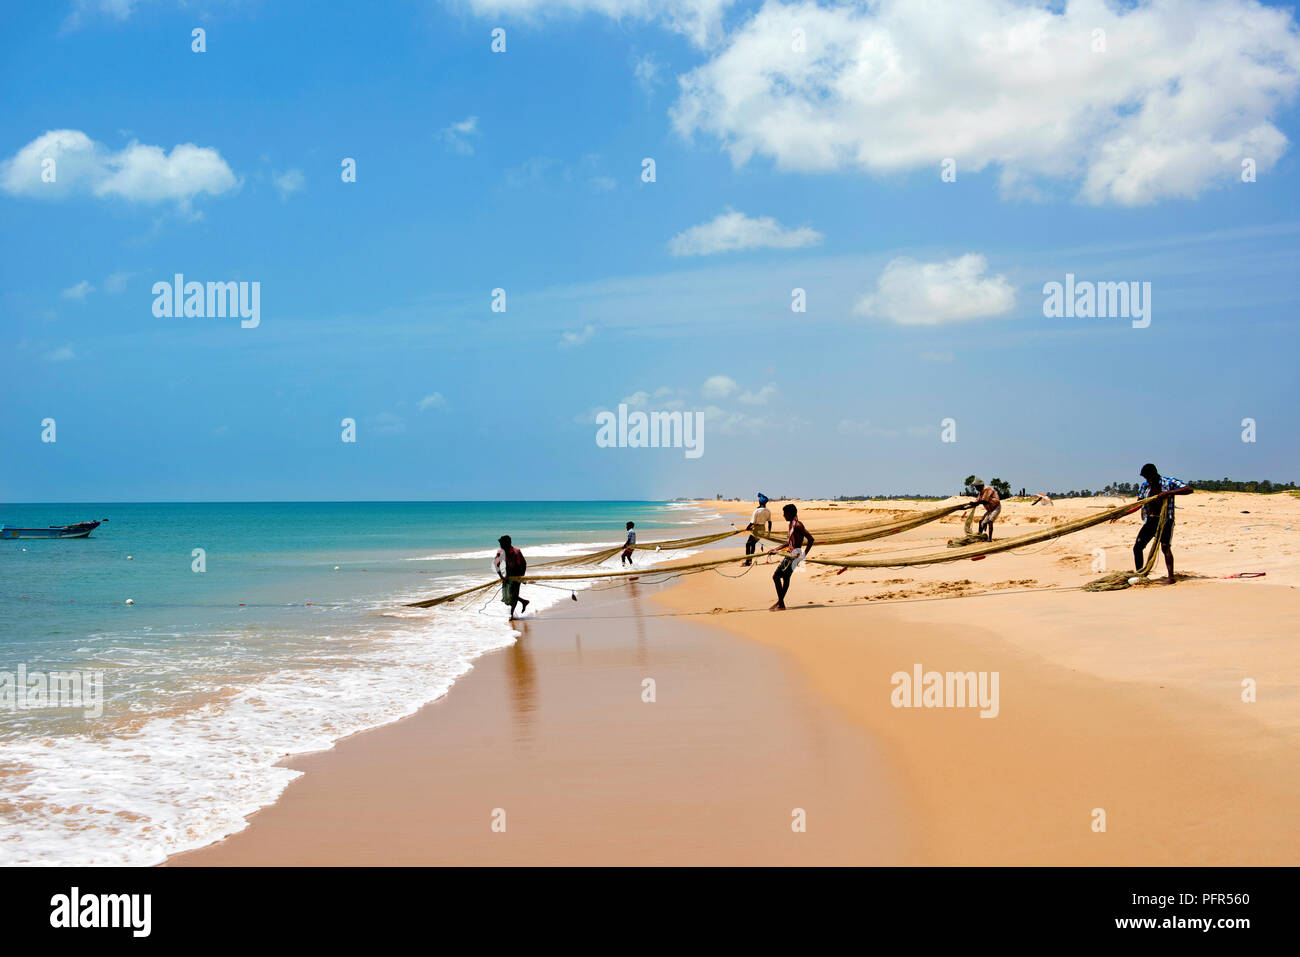 Sri Lanka, North Eastern Province, Jaffna Peninsula, Jaffna, Manalkadu, fishermen pulling fishing net on beach Stock Photo